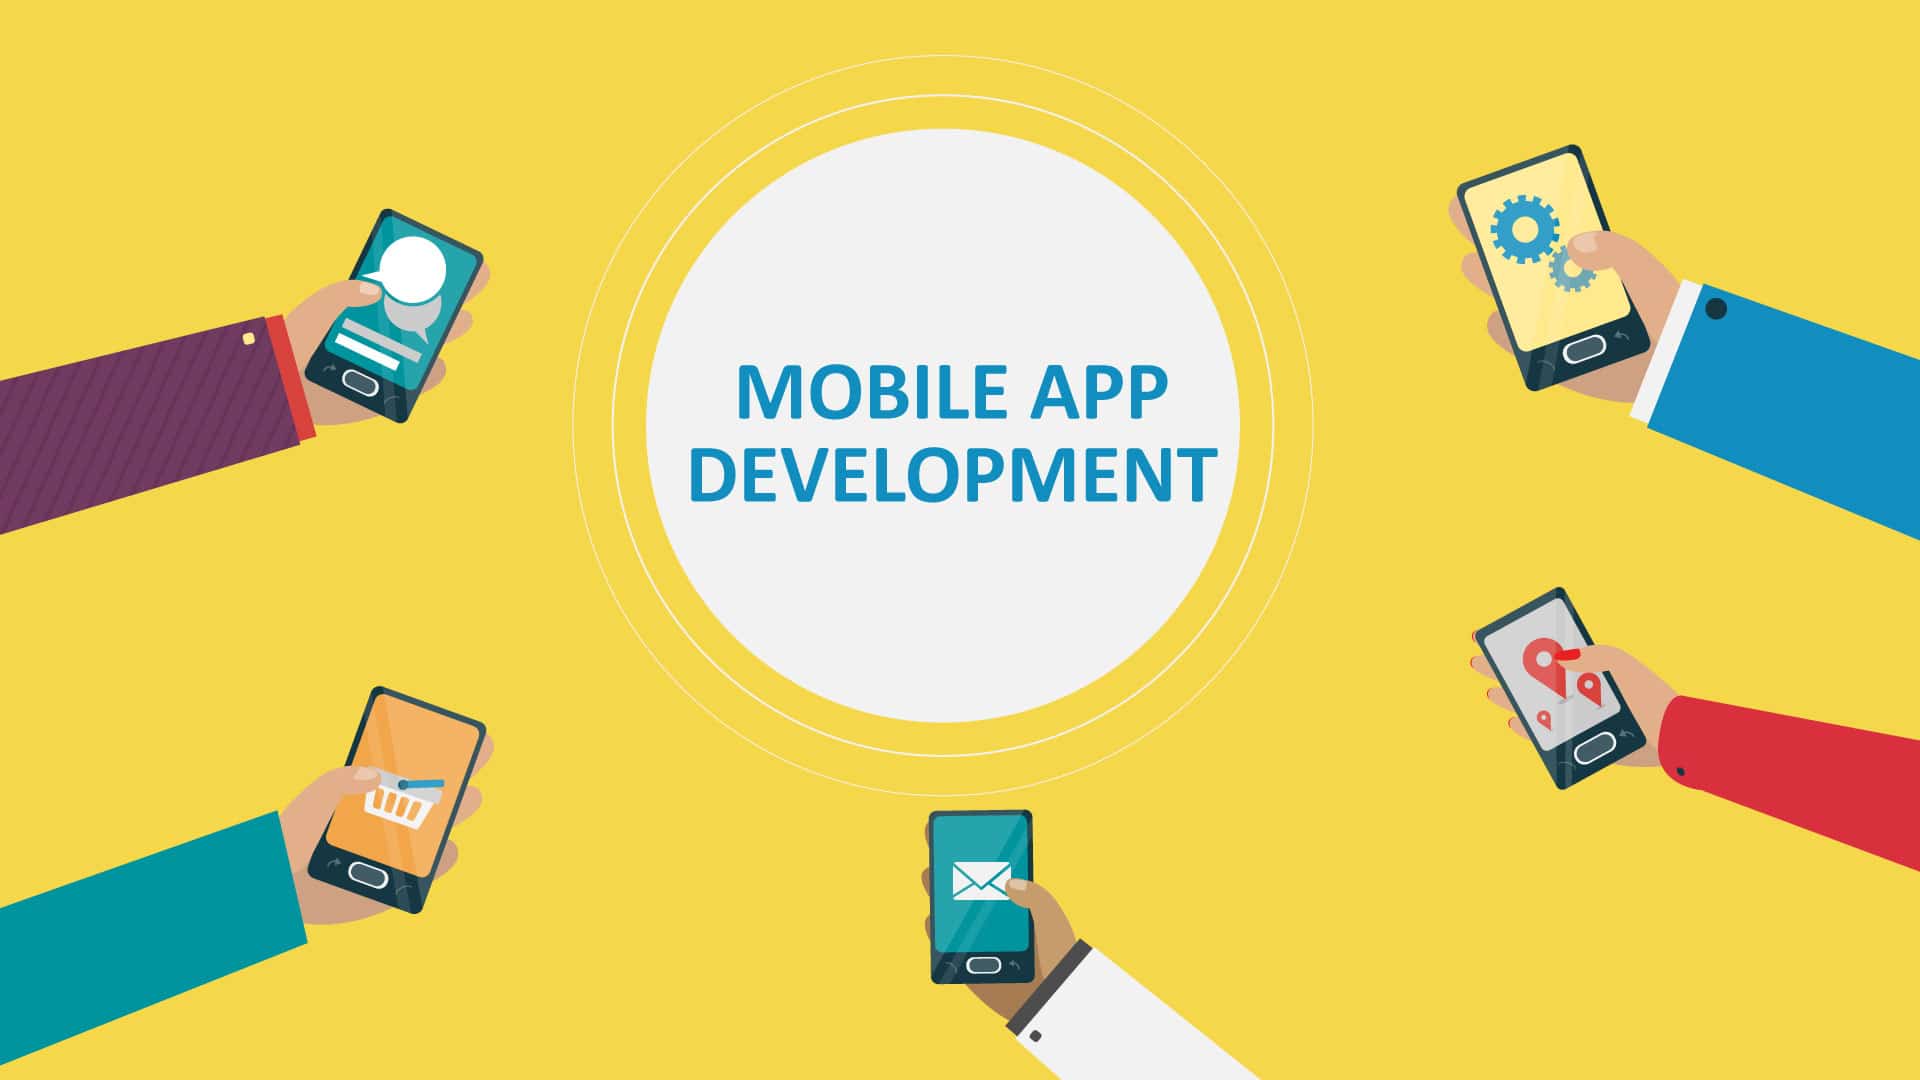 Developing applications. Mobile Development. App Development. Mobile apps. Mobile developer.